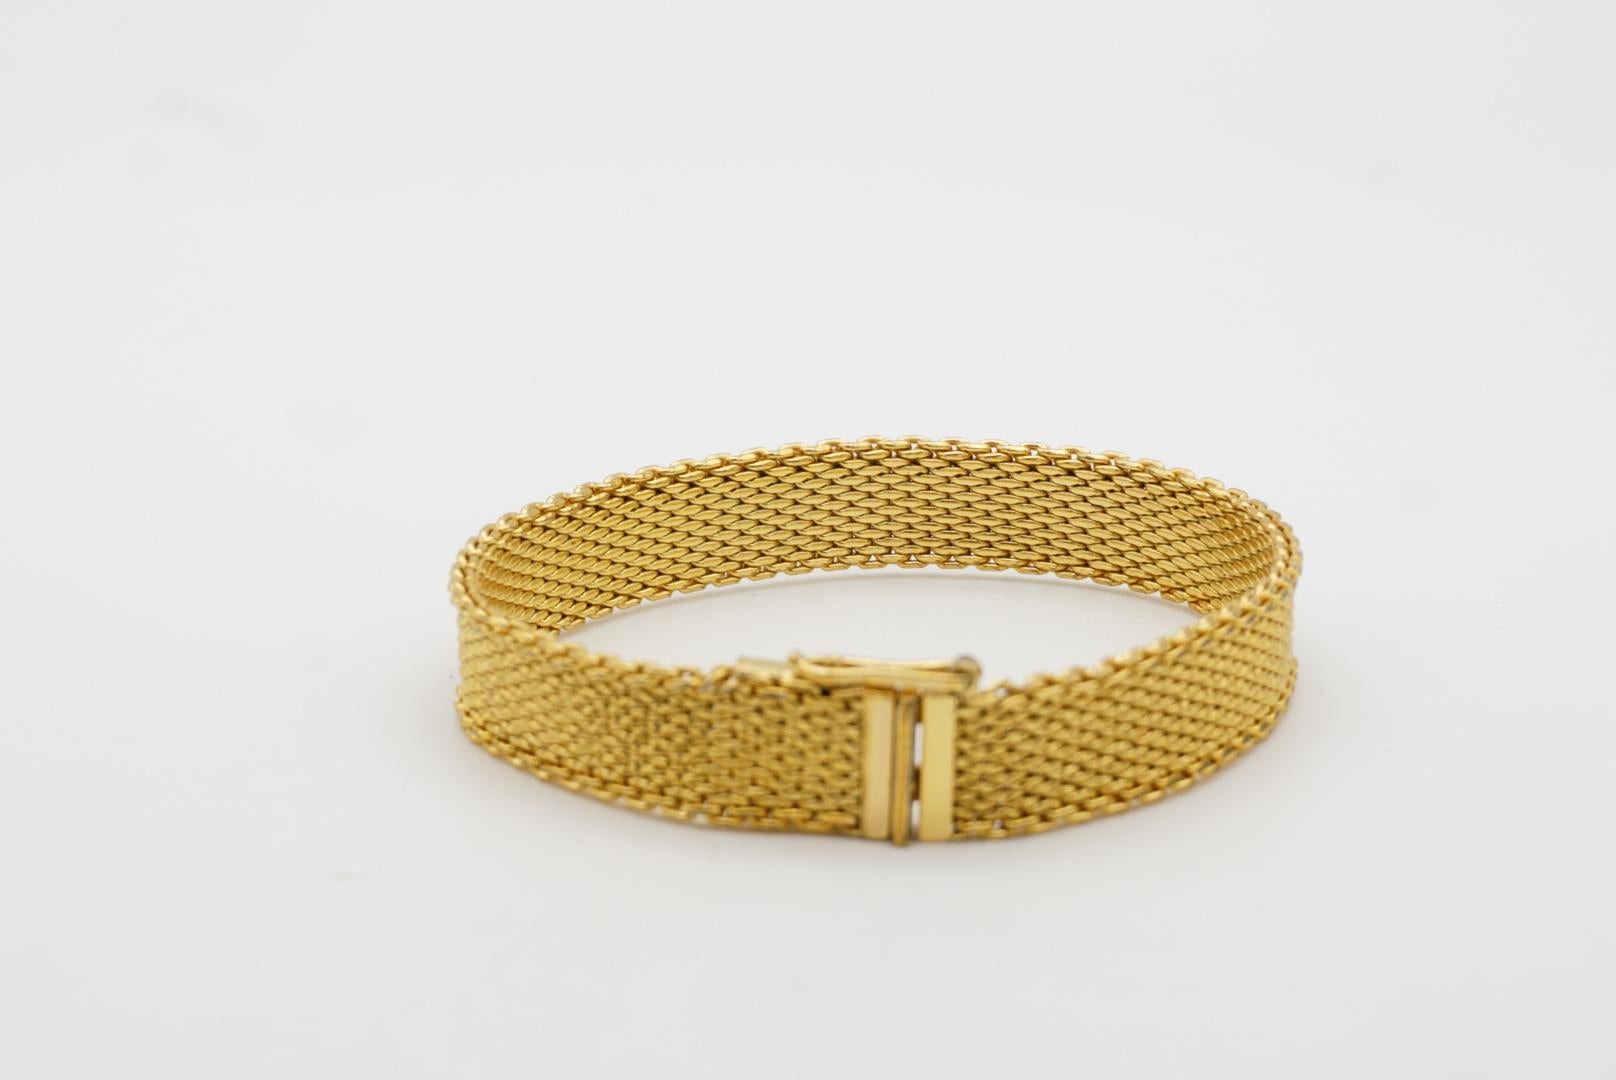 Christian Dior GROSSE 1962 Ridged Weave Link Mesh Modernist Gold Cuff Bracelet For Sale 3